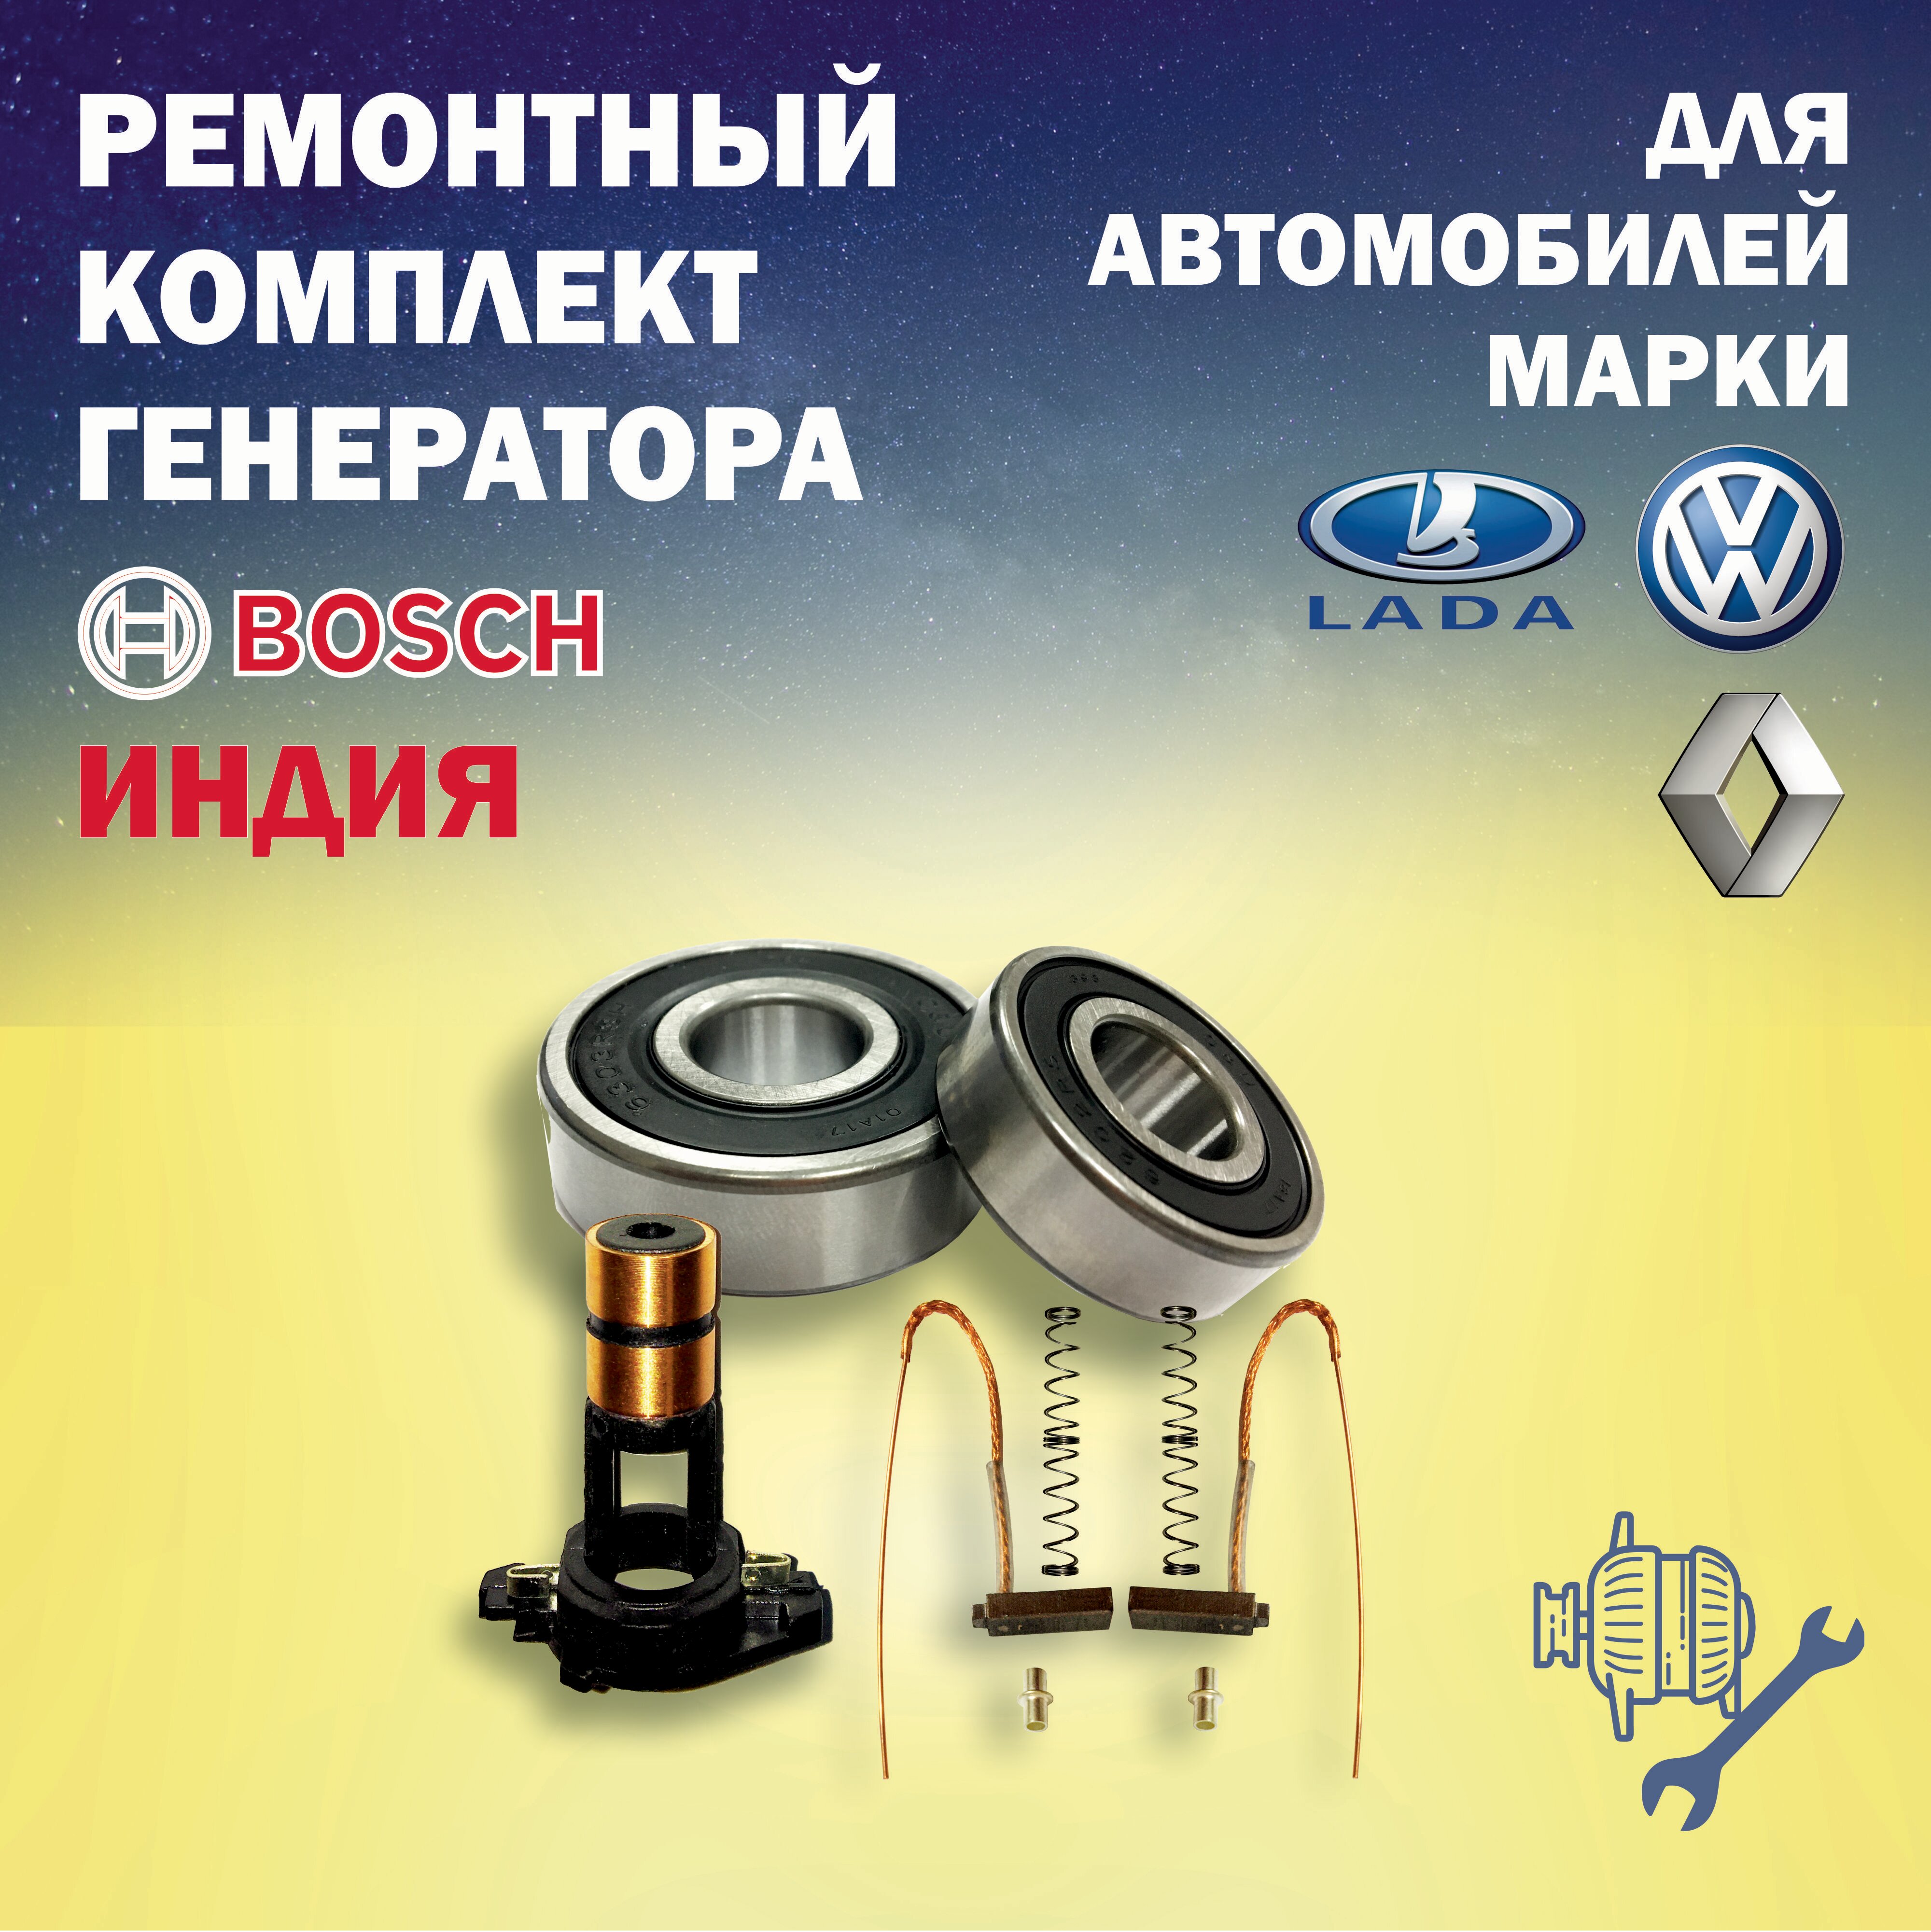 Ремонтный комплект для генератора bosch-индия на автомобили Lada Granta(Лада Гранта) Largus(Ларгус) Vesta (Веста) Priora (Приора) Kalina (Калина)Lada X-Ray (Икс-Рэй) Volkswagen Polo(Фольксваген Поло) Renault Logan(Рено Логан)